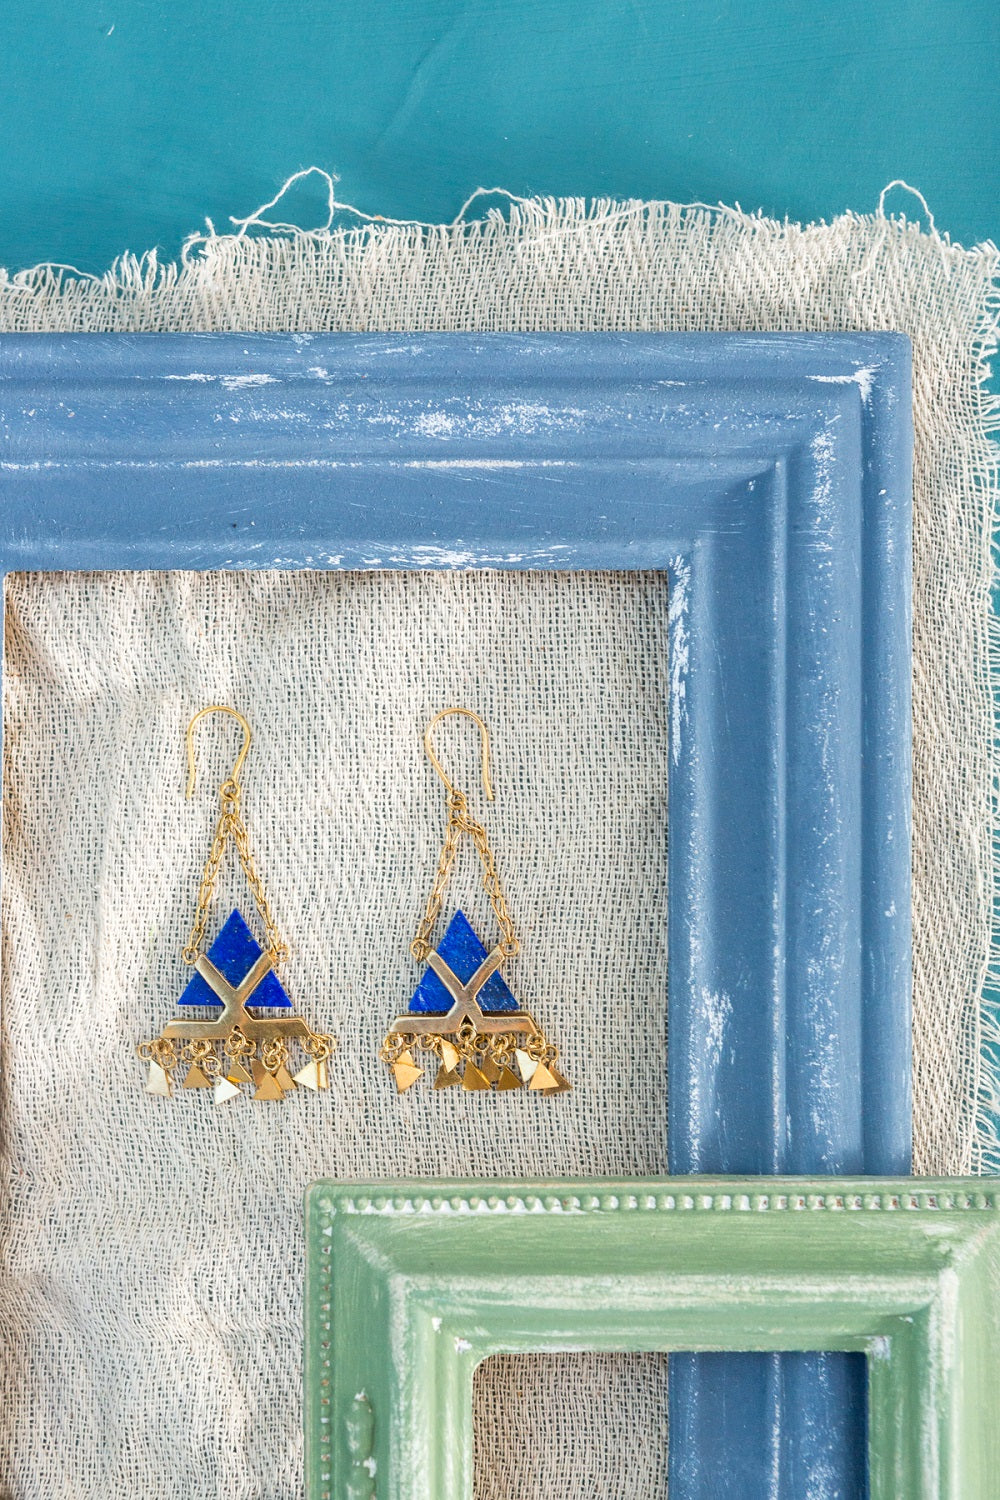 Artisan & Fox - Jewellery - Mountain Earrings in Lapis Lazuli - Handcrafted in Afghanistan